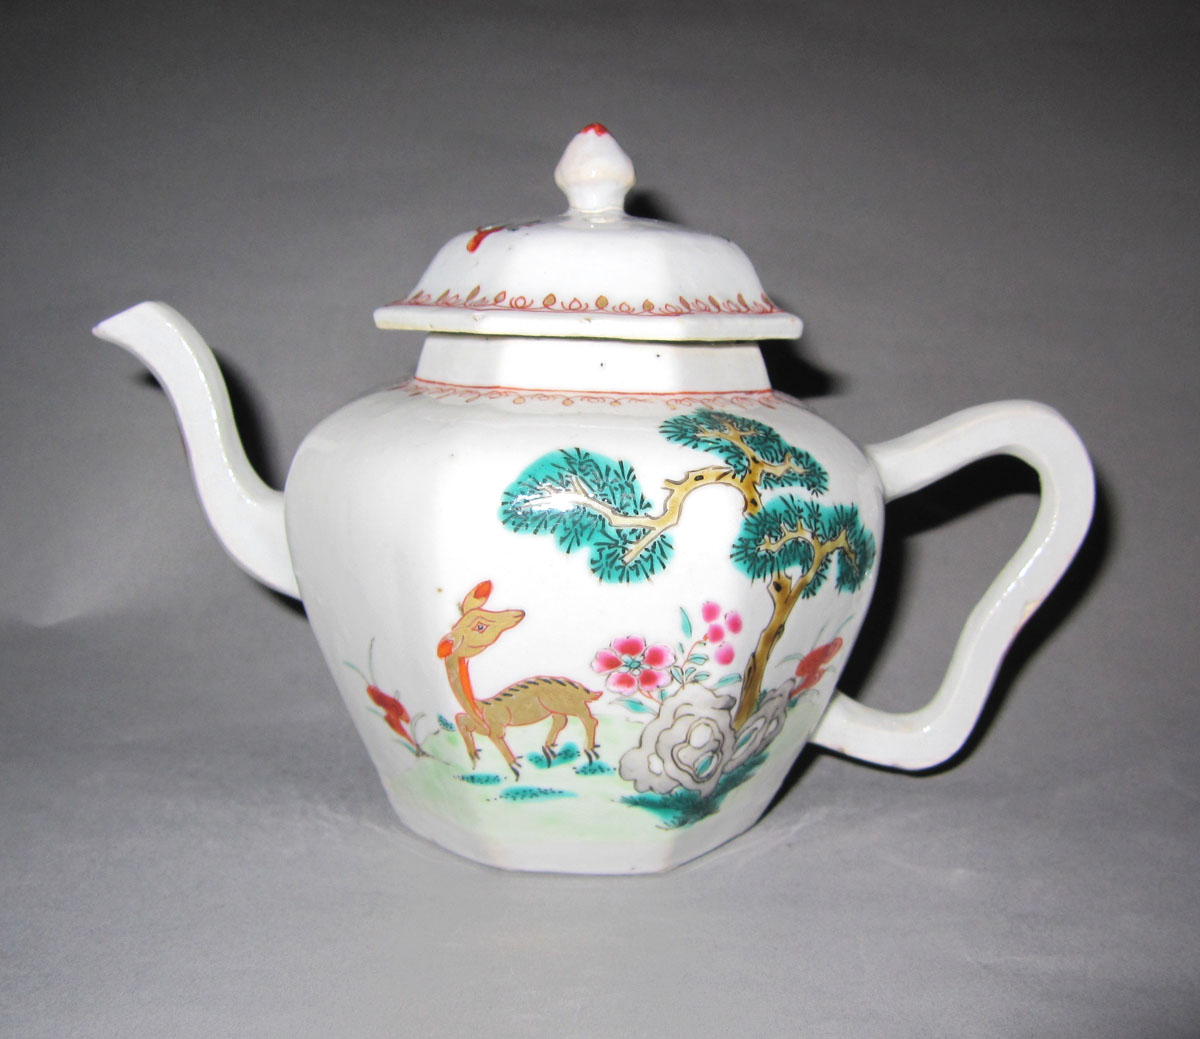 1953.0156.013 A, B Porcelain teapot